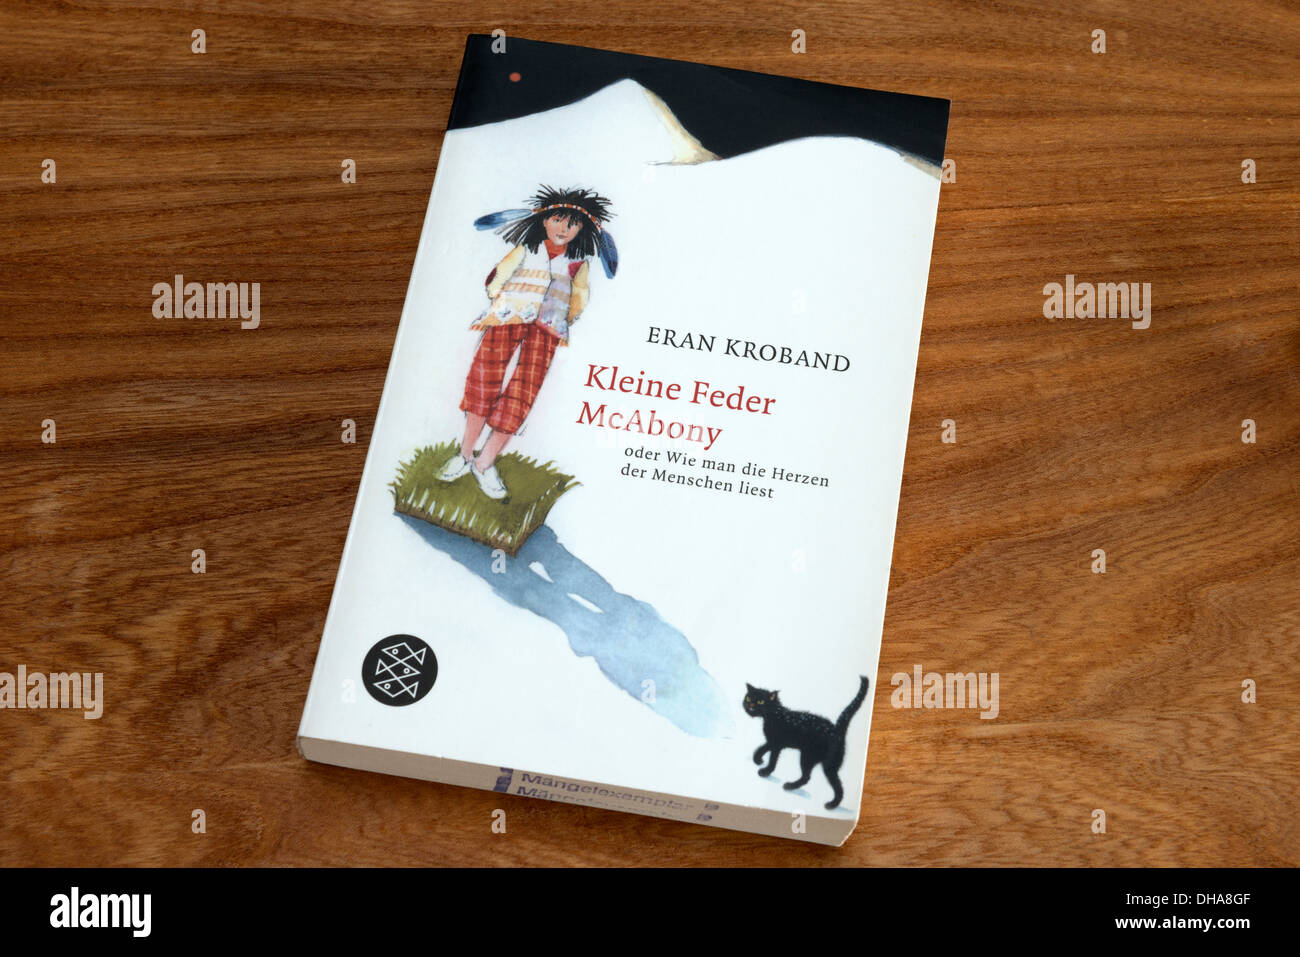 Eran Kroband Kleine Feder McAbony paperback book Stock Photo